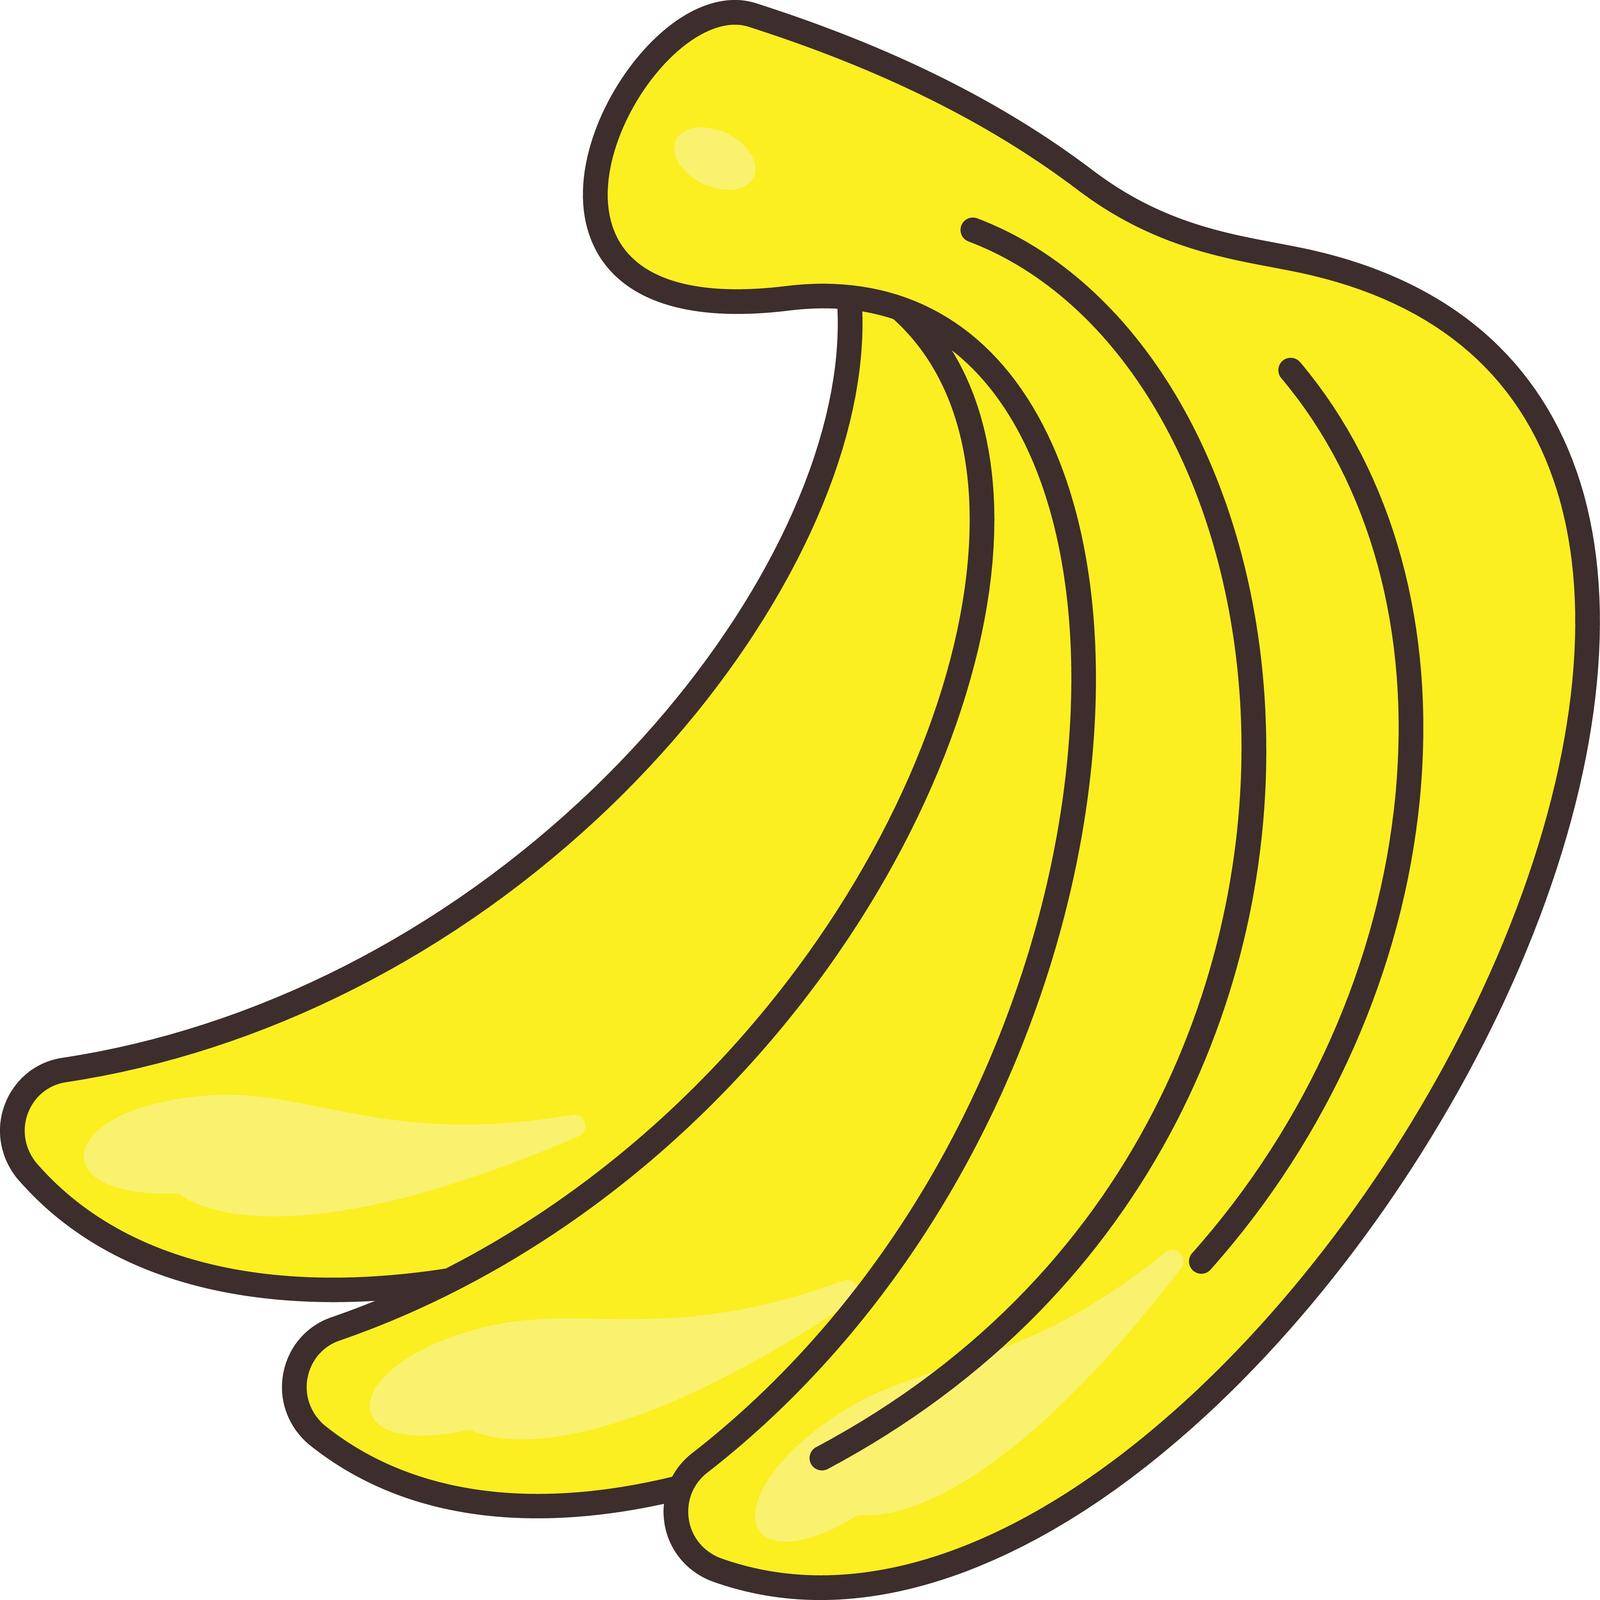 banana by FlaticonsDesign